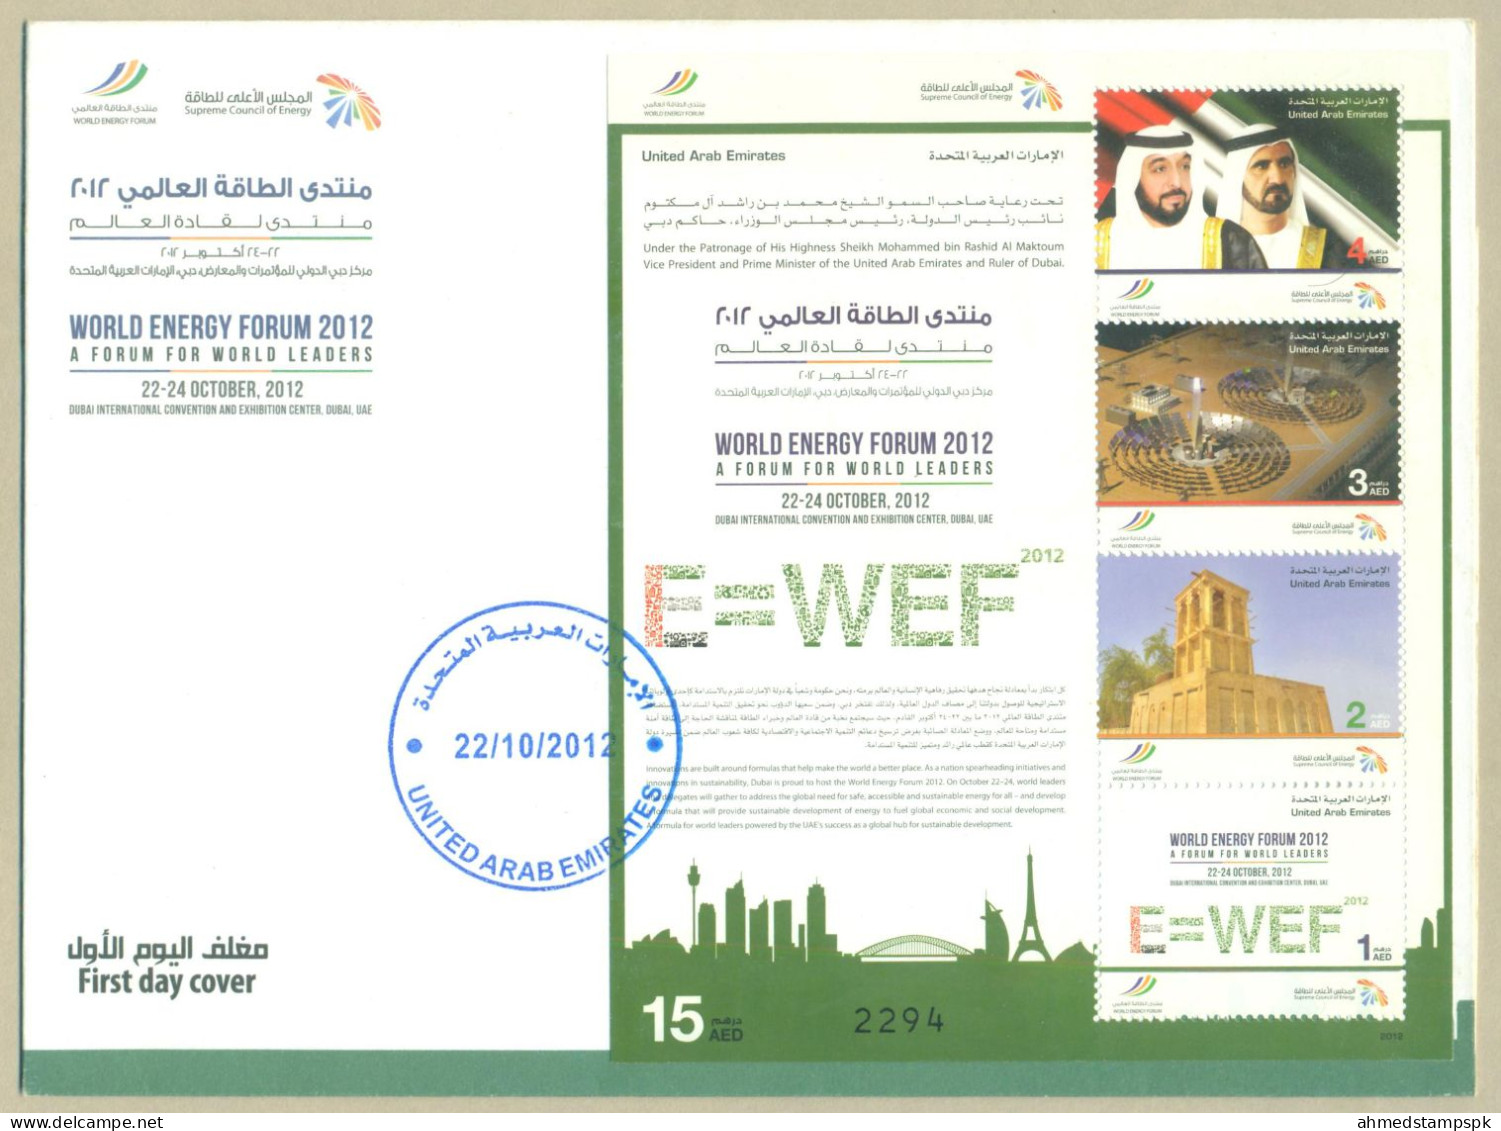 UAE UNITED ARAB EMIRATES MNH FDC FIRST DAY COVER MNH 2012 WORLD ENERGY FORUM - Emirats Arabes Unis (Général)